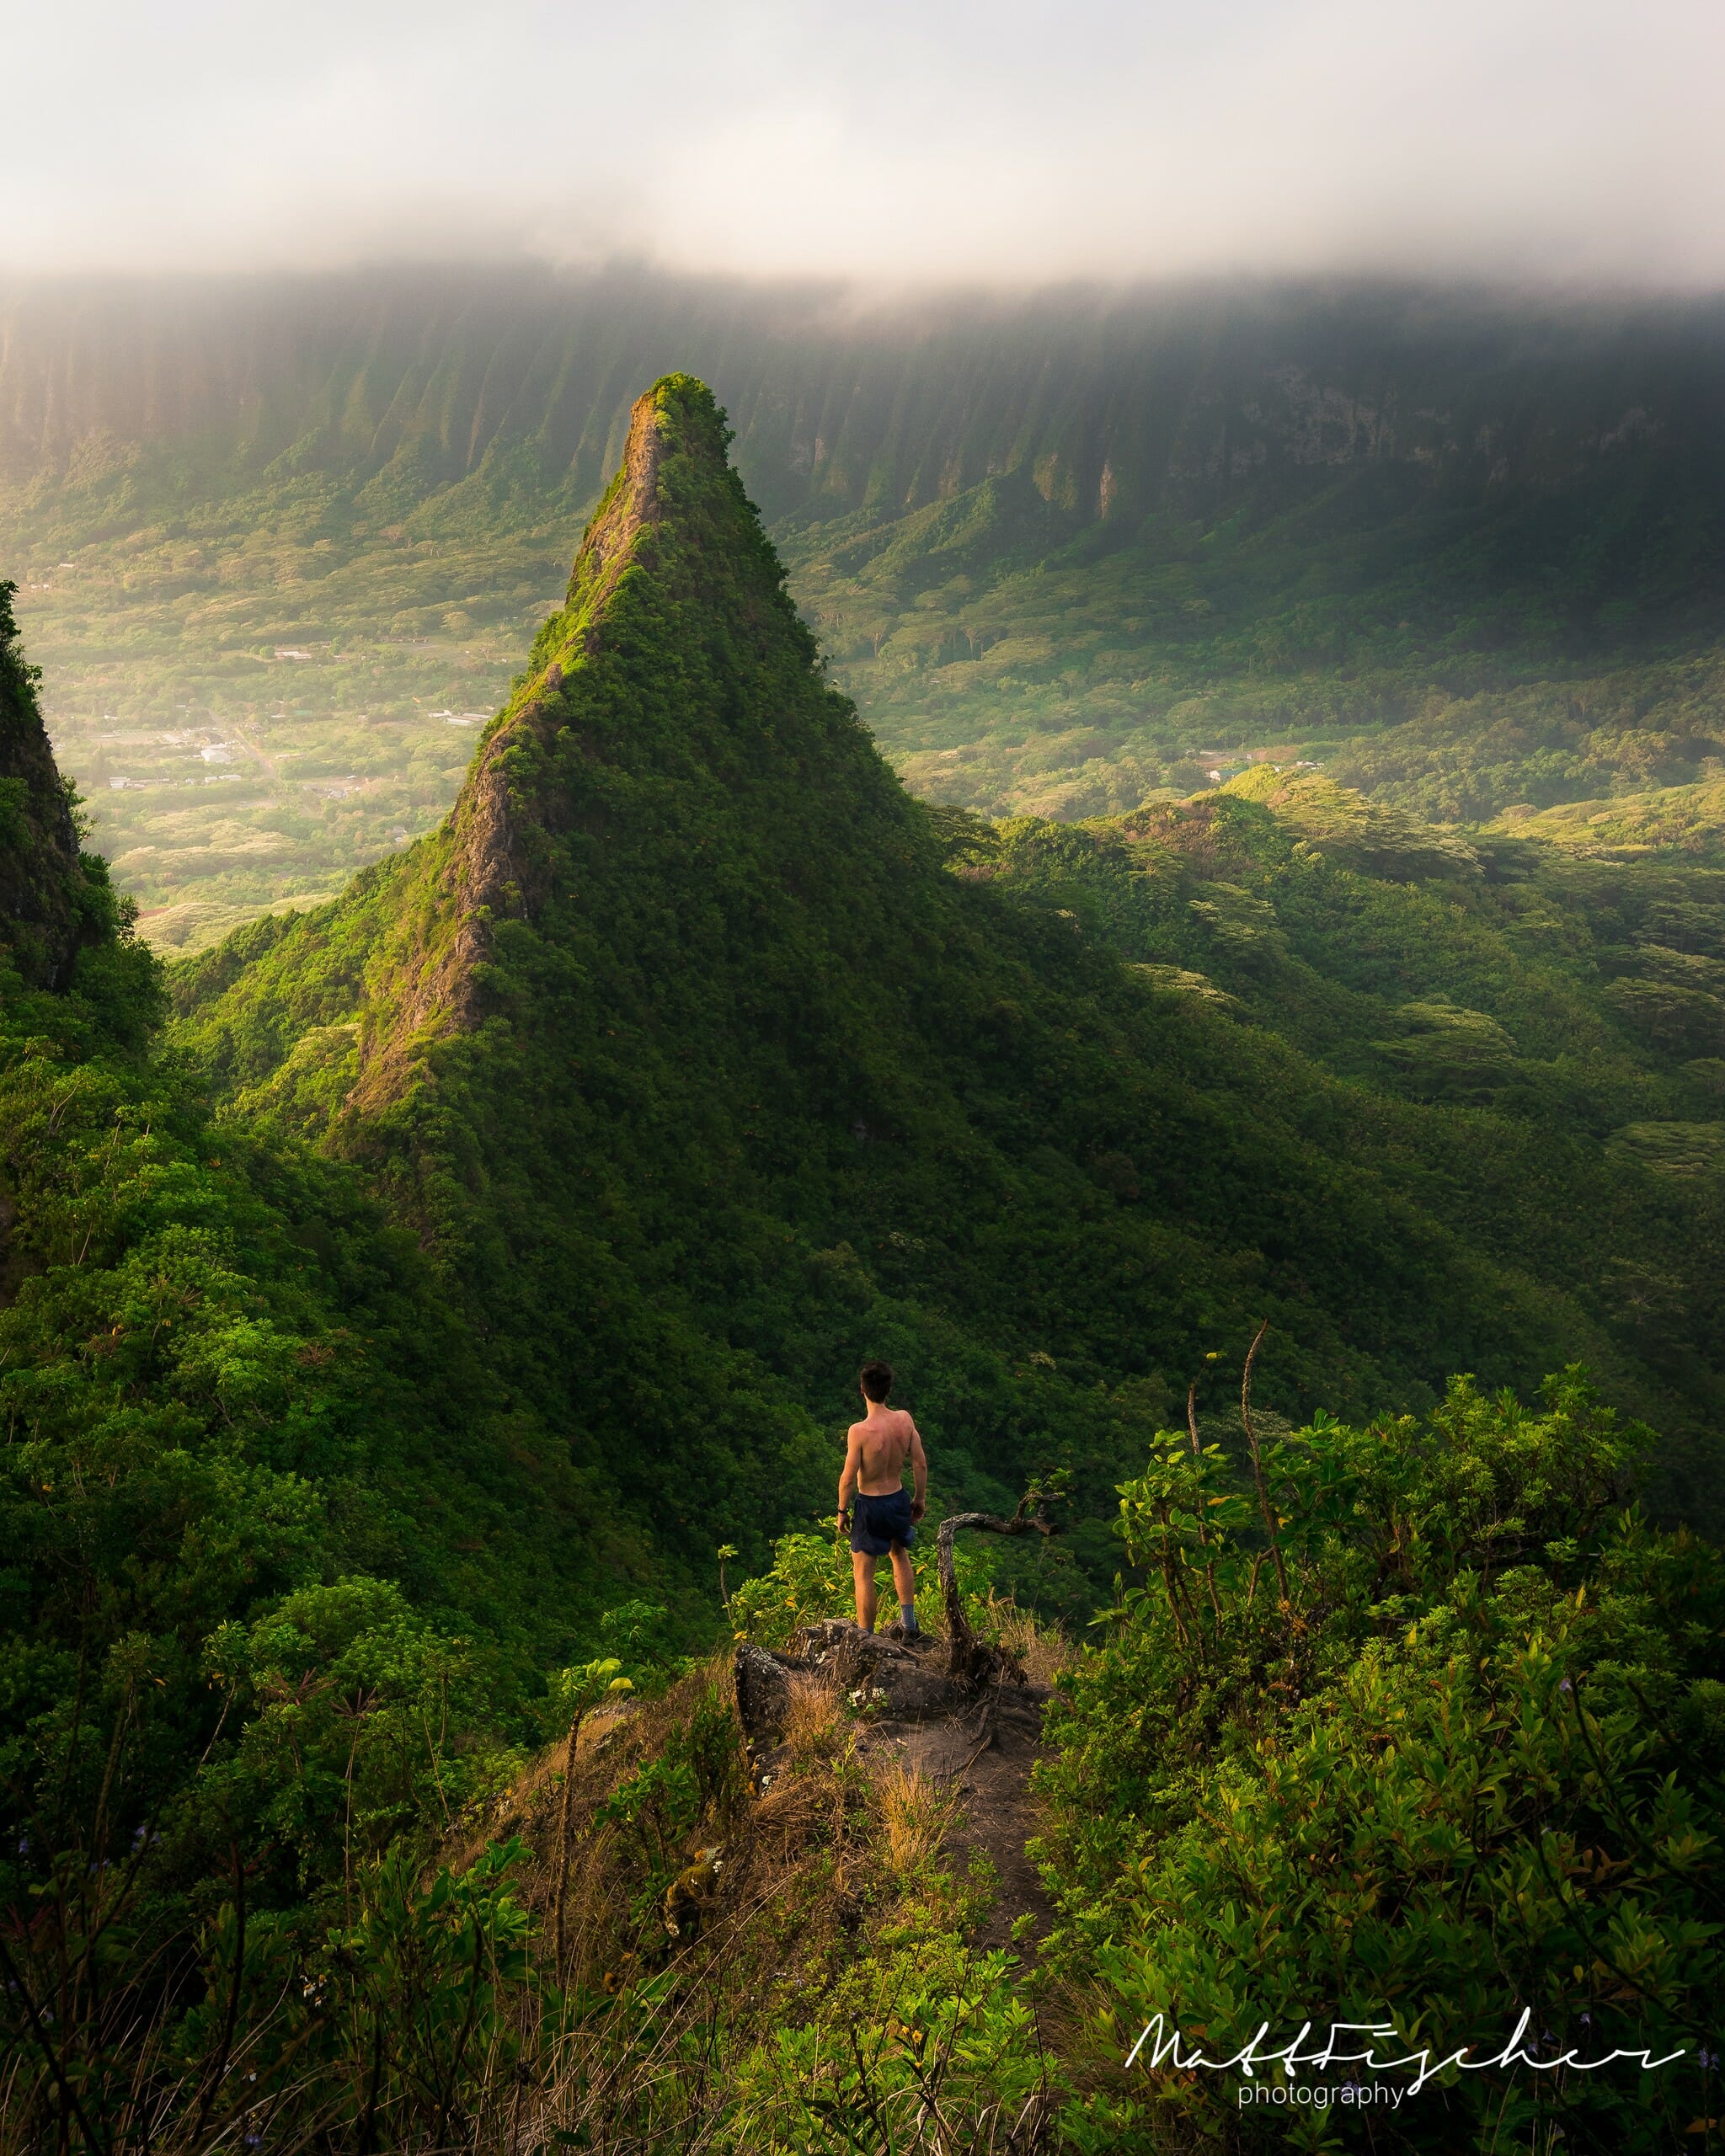 A hiker on the Olomana or the Three Peaks Trail in Oahu, Hawaii